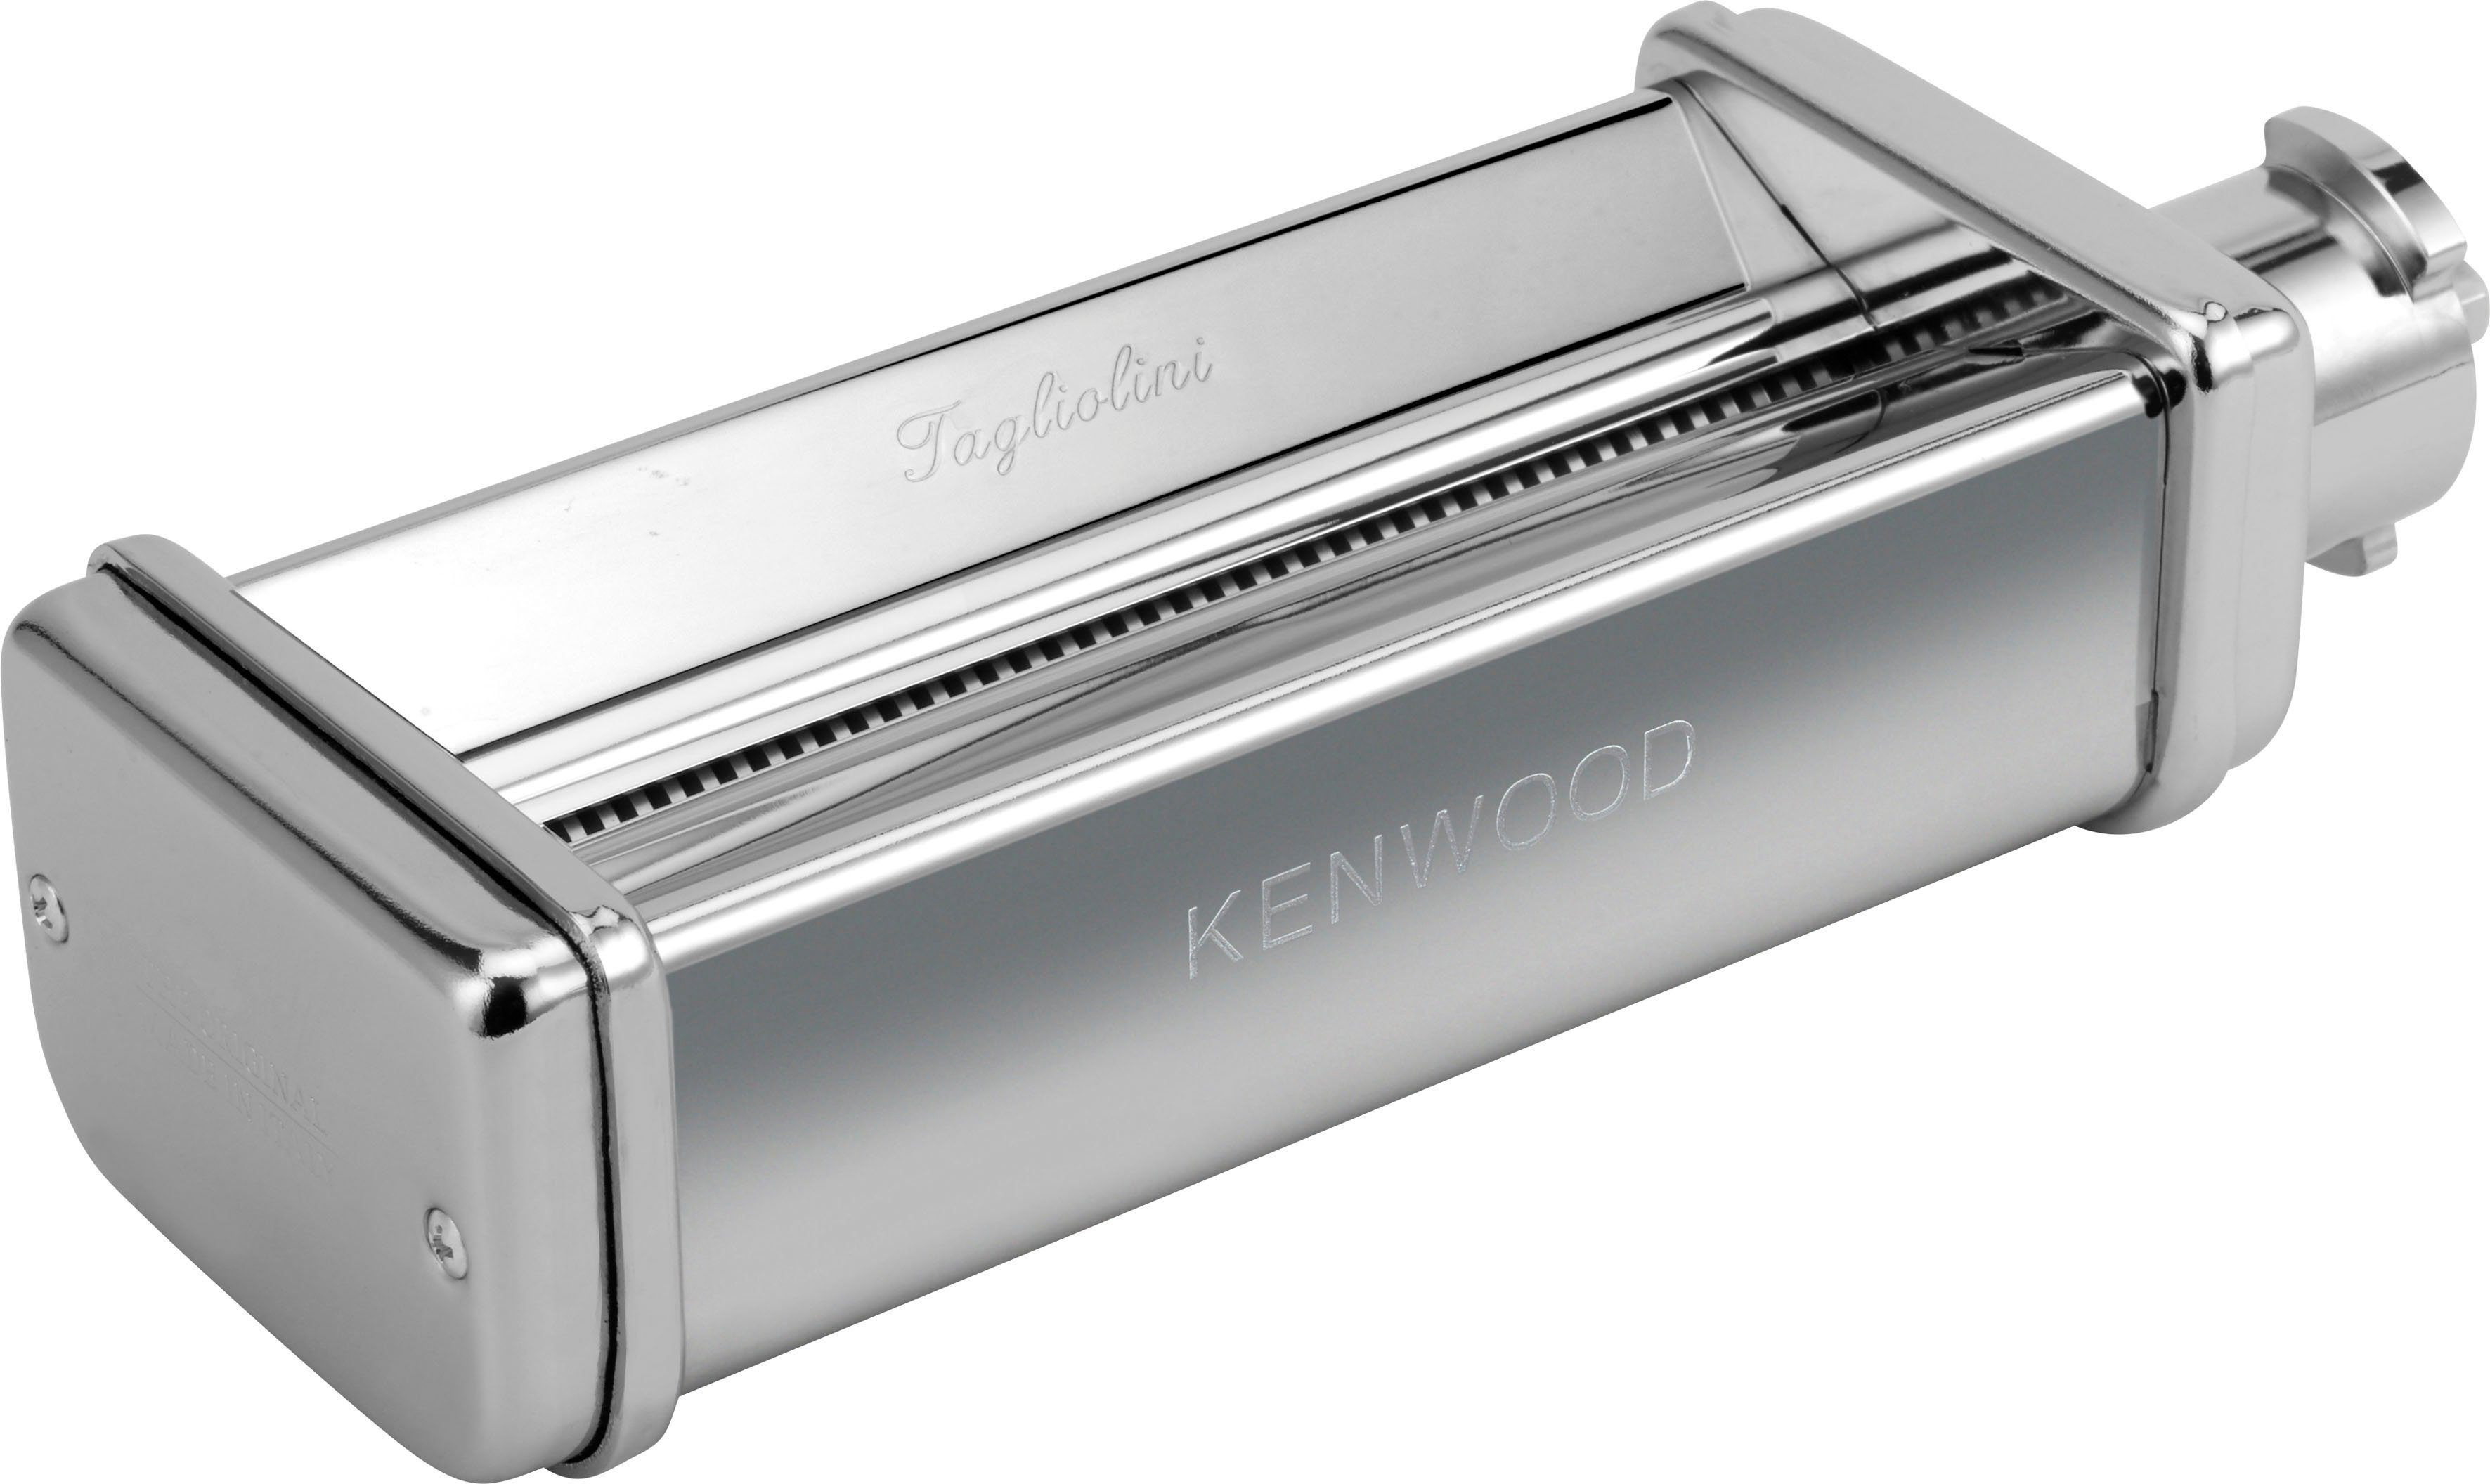 Kenwood pastawals tagliolini snij-inzet KAX982ME voor Kenwood-keukenmachines